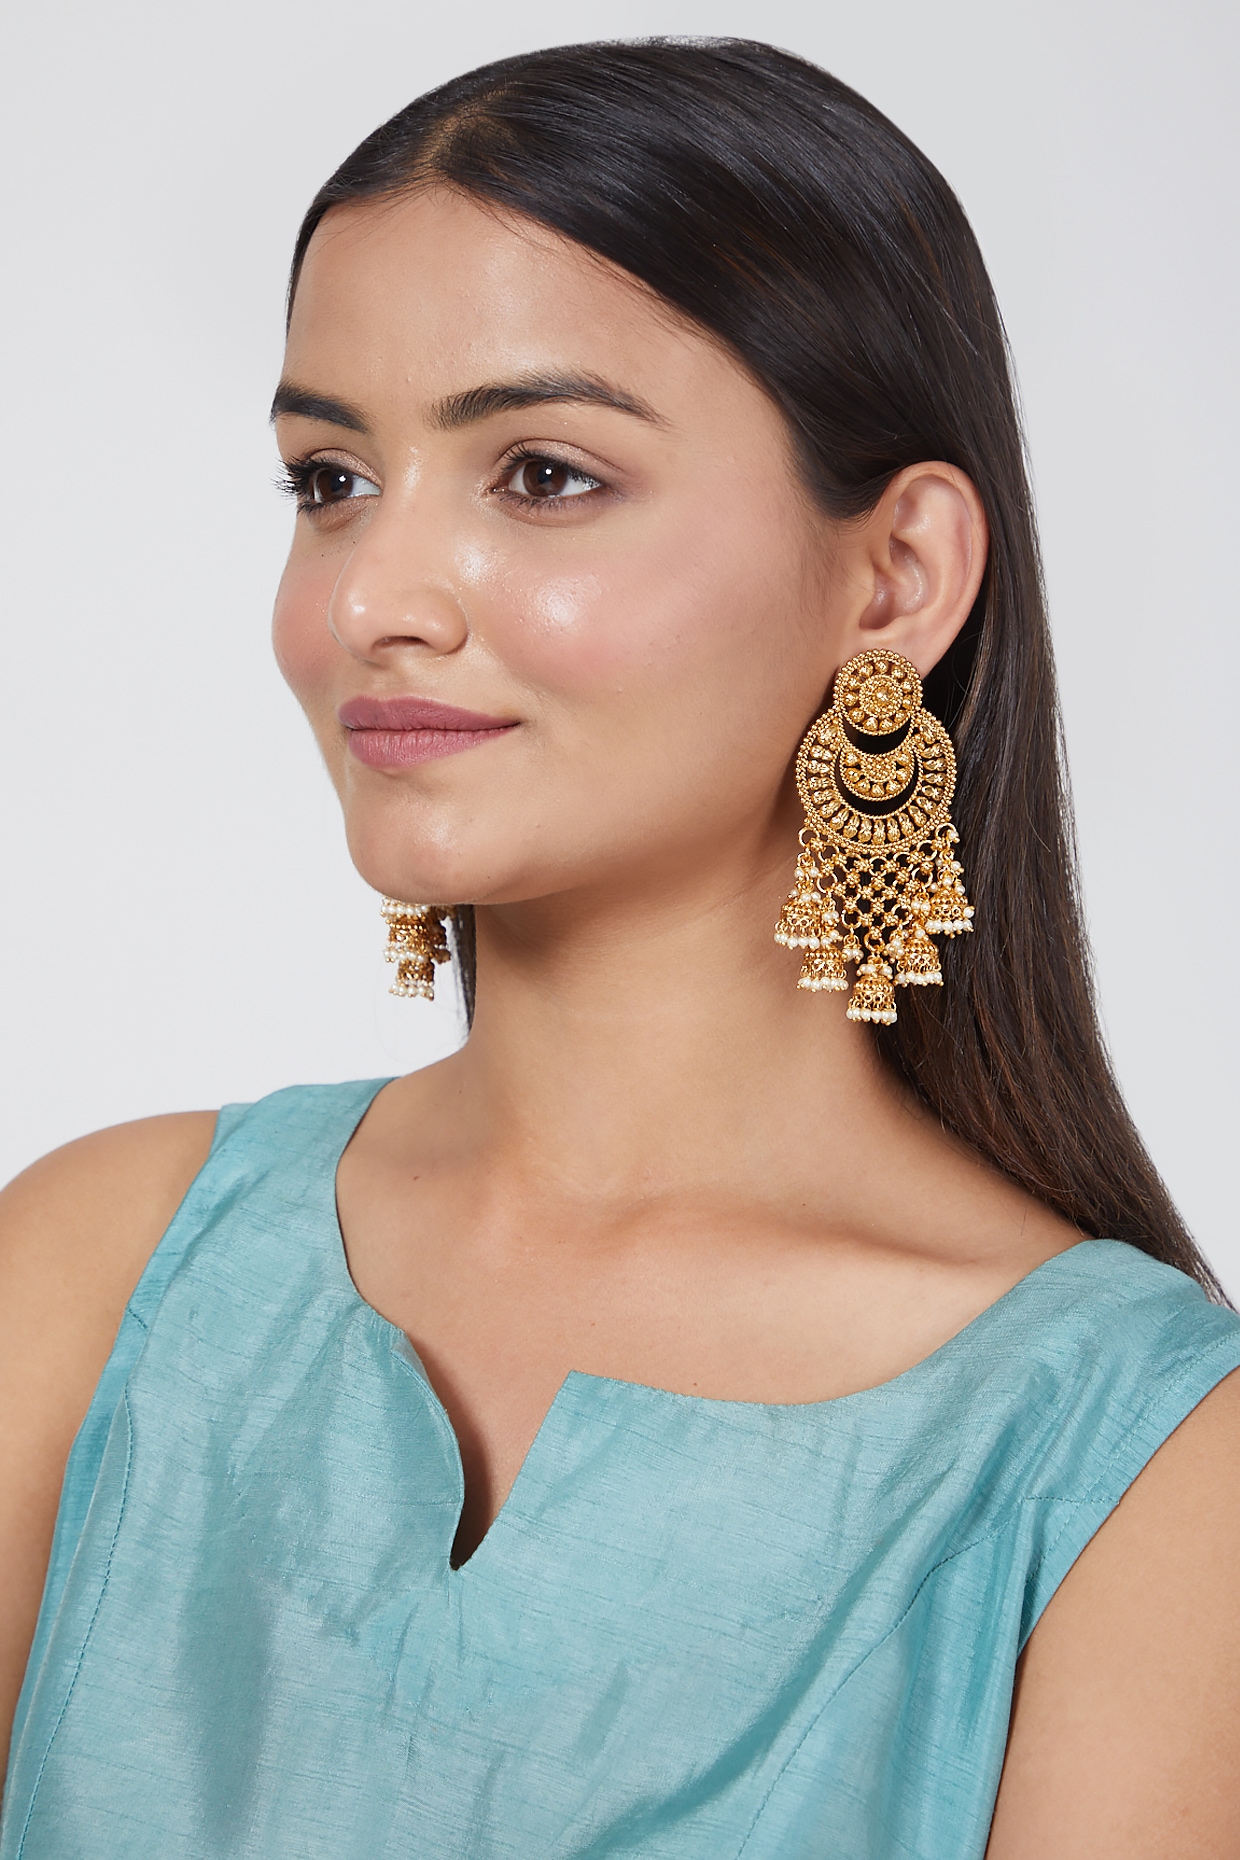 Buy Indian Jhumka Jhumki Dangle Earrings - 6PAIR/SET Silver Tassel Bell  -shaped Stud Earrings for Women (1) at Amazon.in